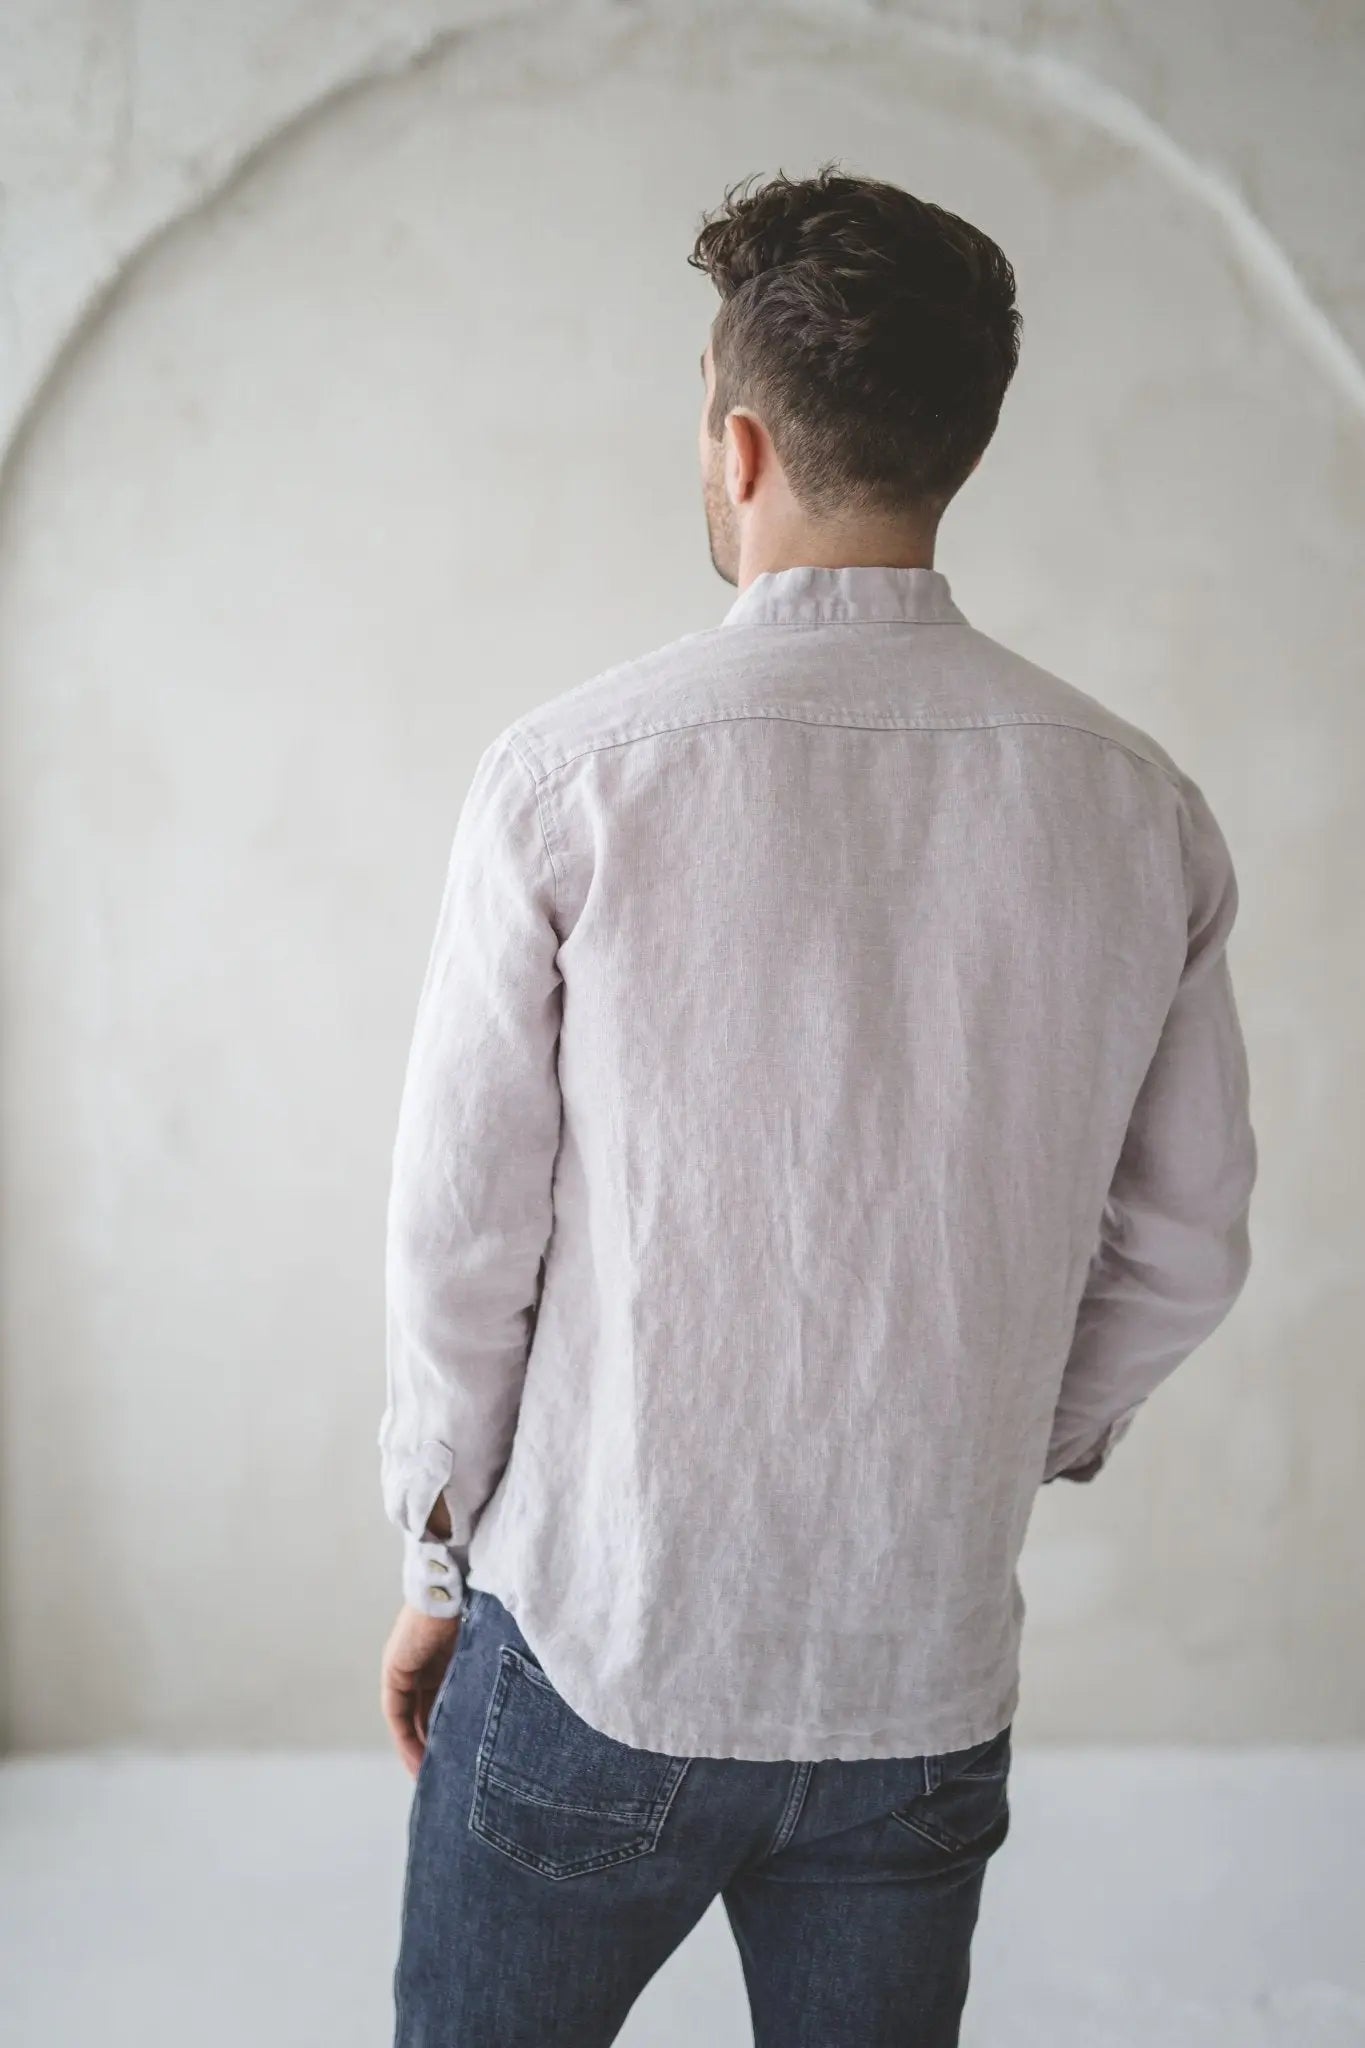 Oxford Linen Men's Shirt - Epic Linen luxury linen